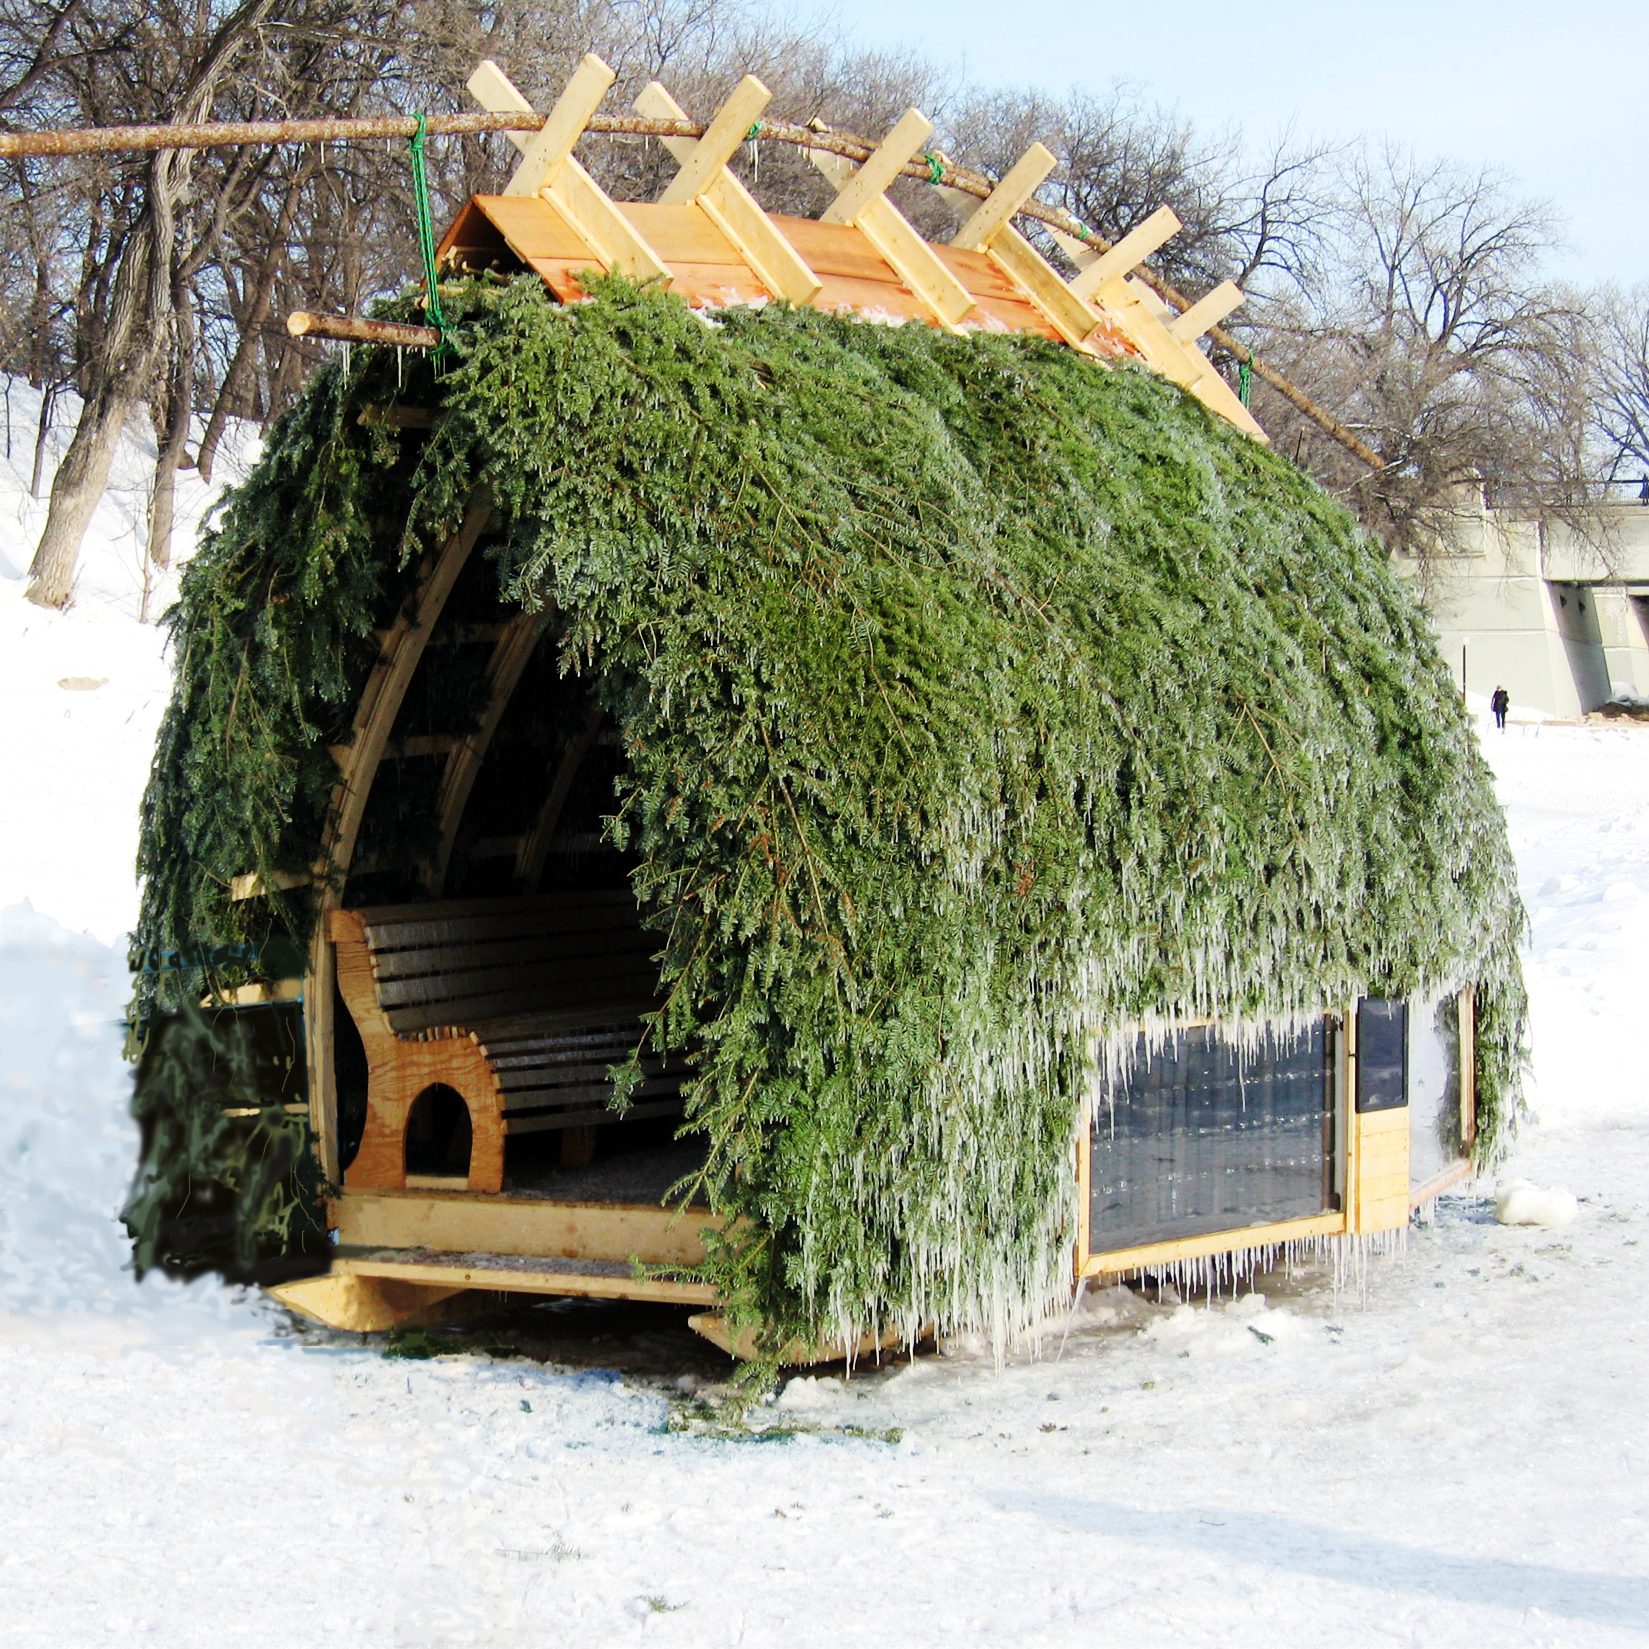 warming hut